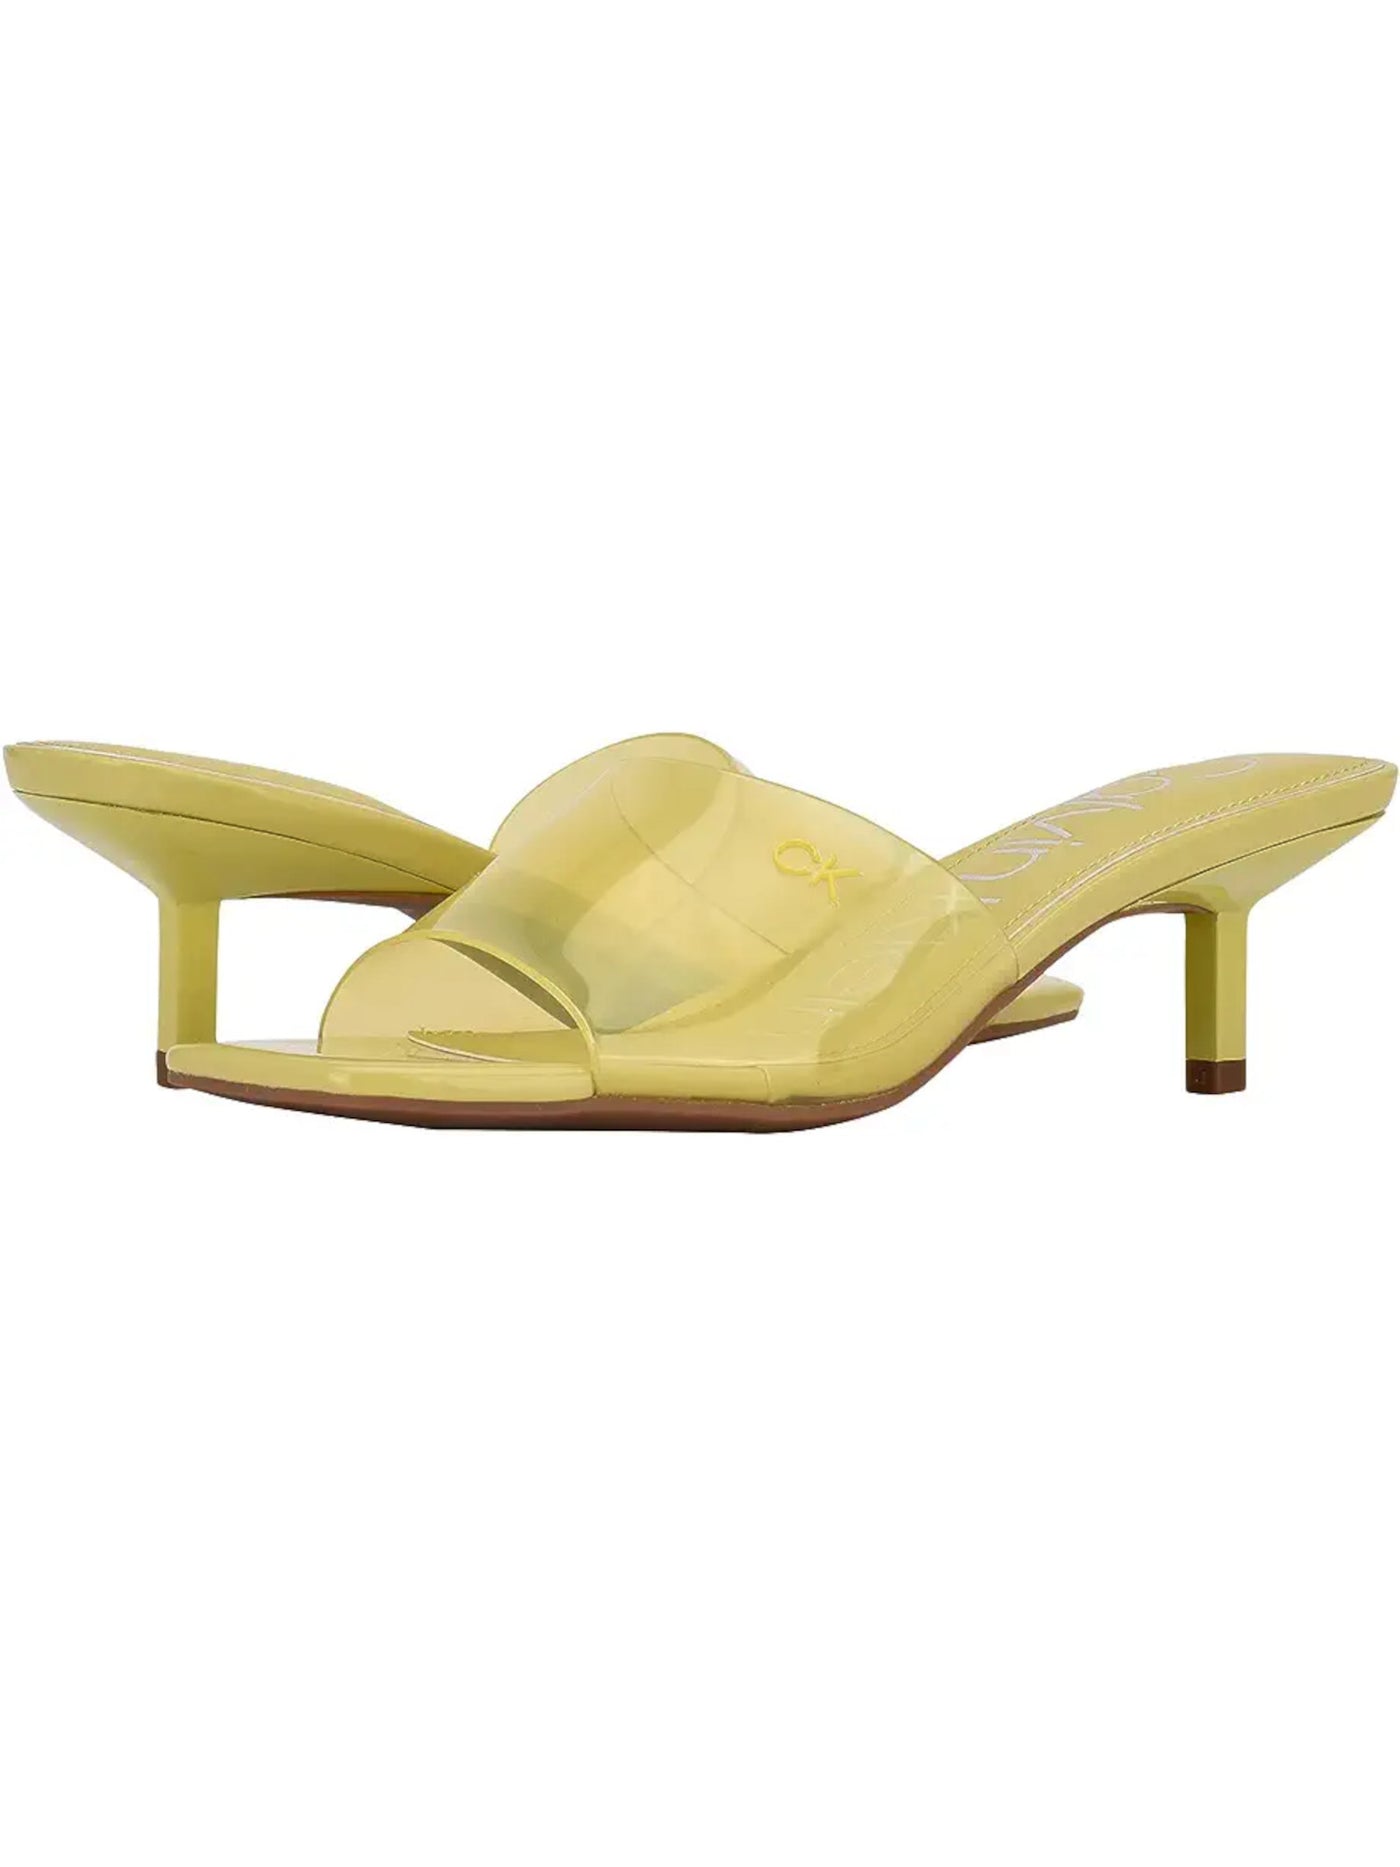 CALVIN KLEIN Womens Yellow Translucent Padded Graya Square Toe Kitten Heel Slip On Dress Heeled Sandal 7.5 M